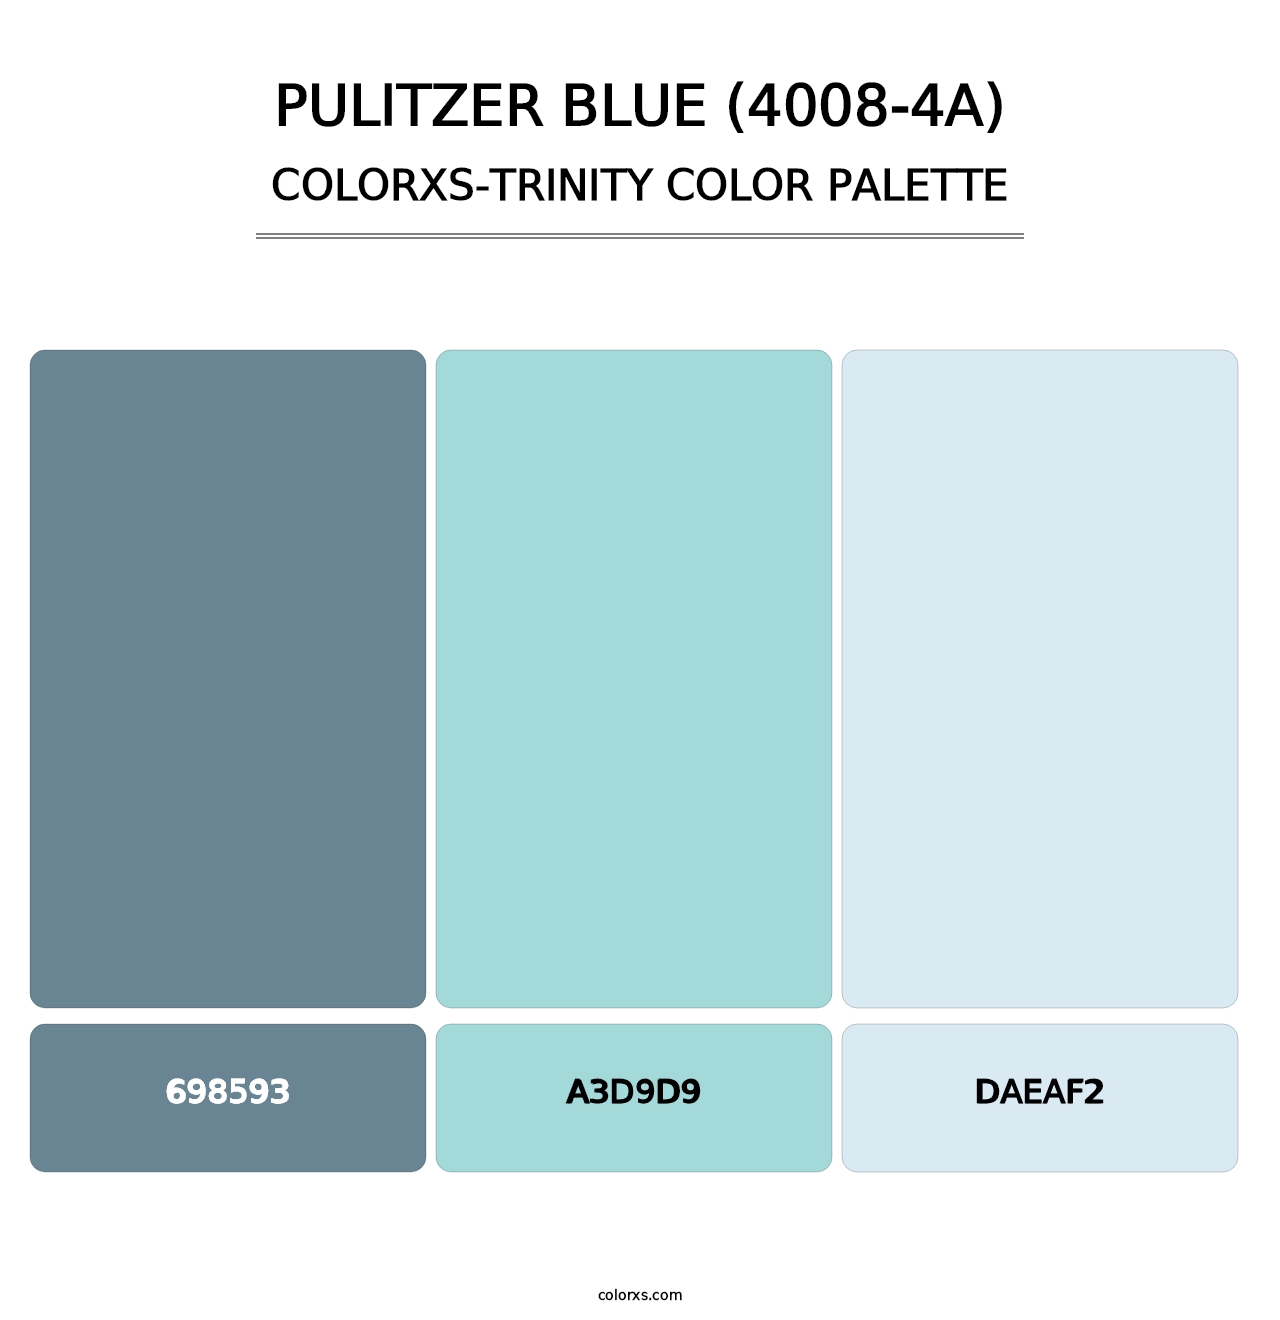 Pulitzer Blue (4008-4A) - Colorxs Trinity Palette